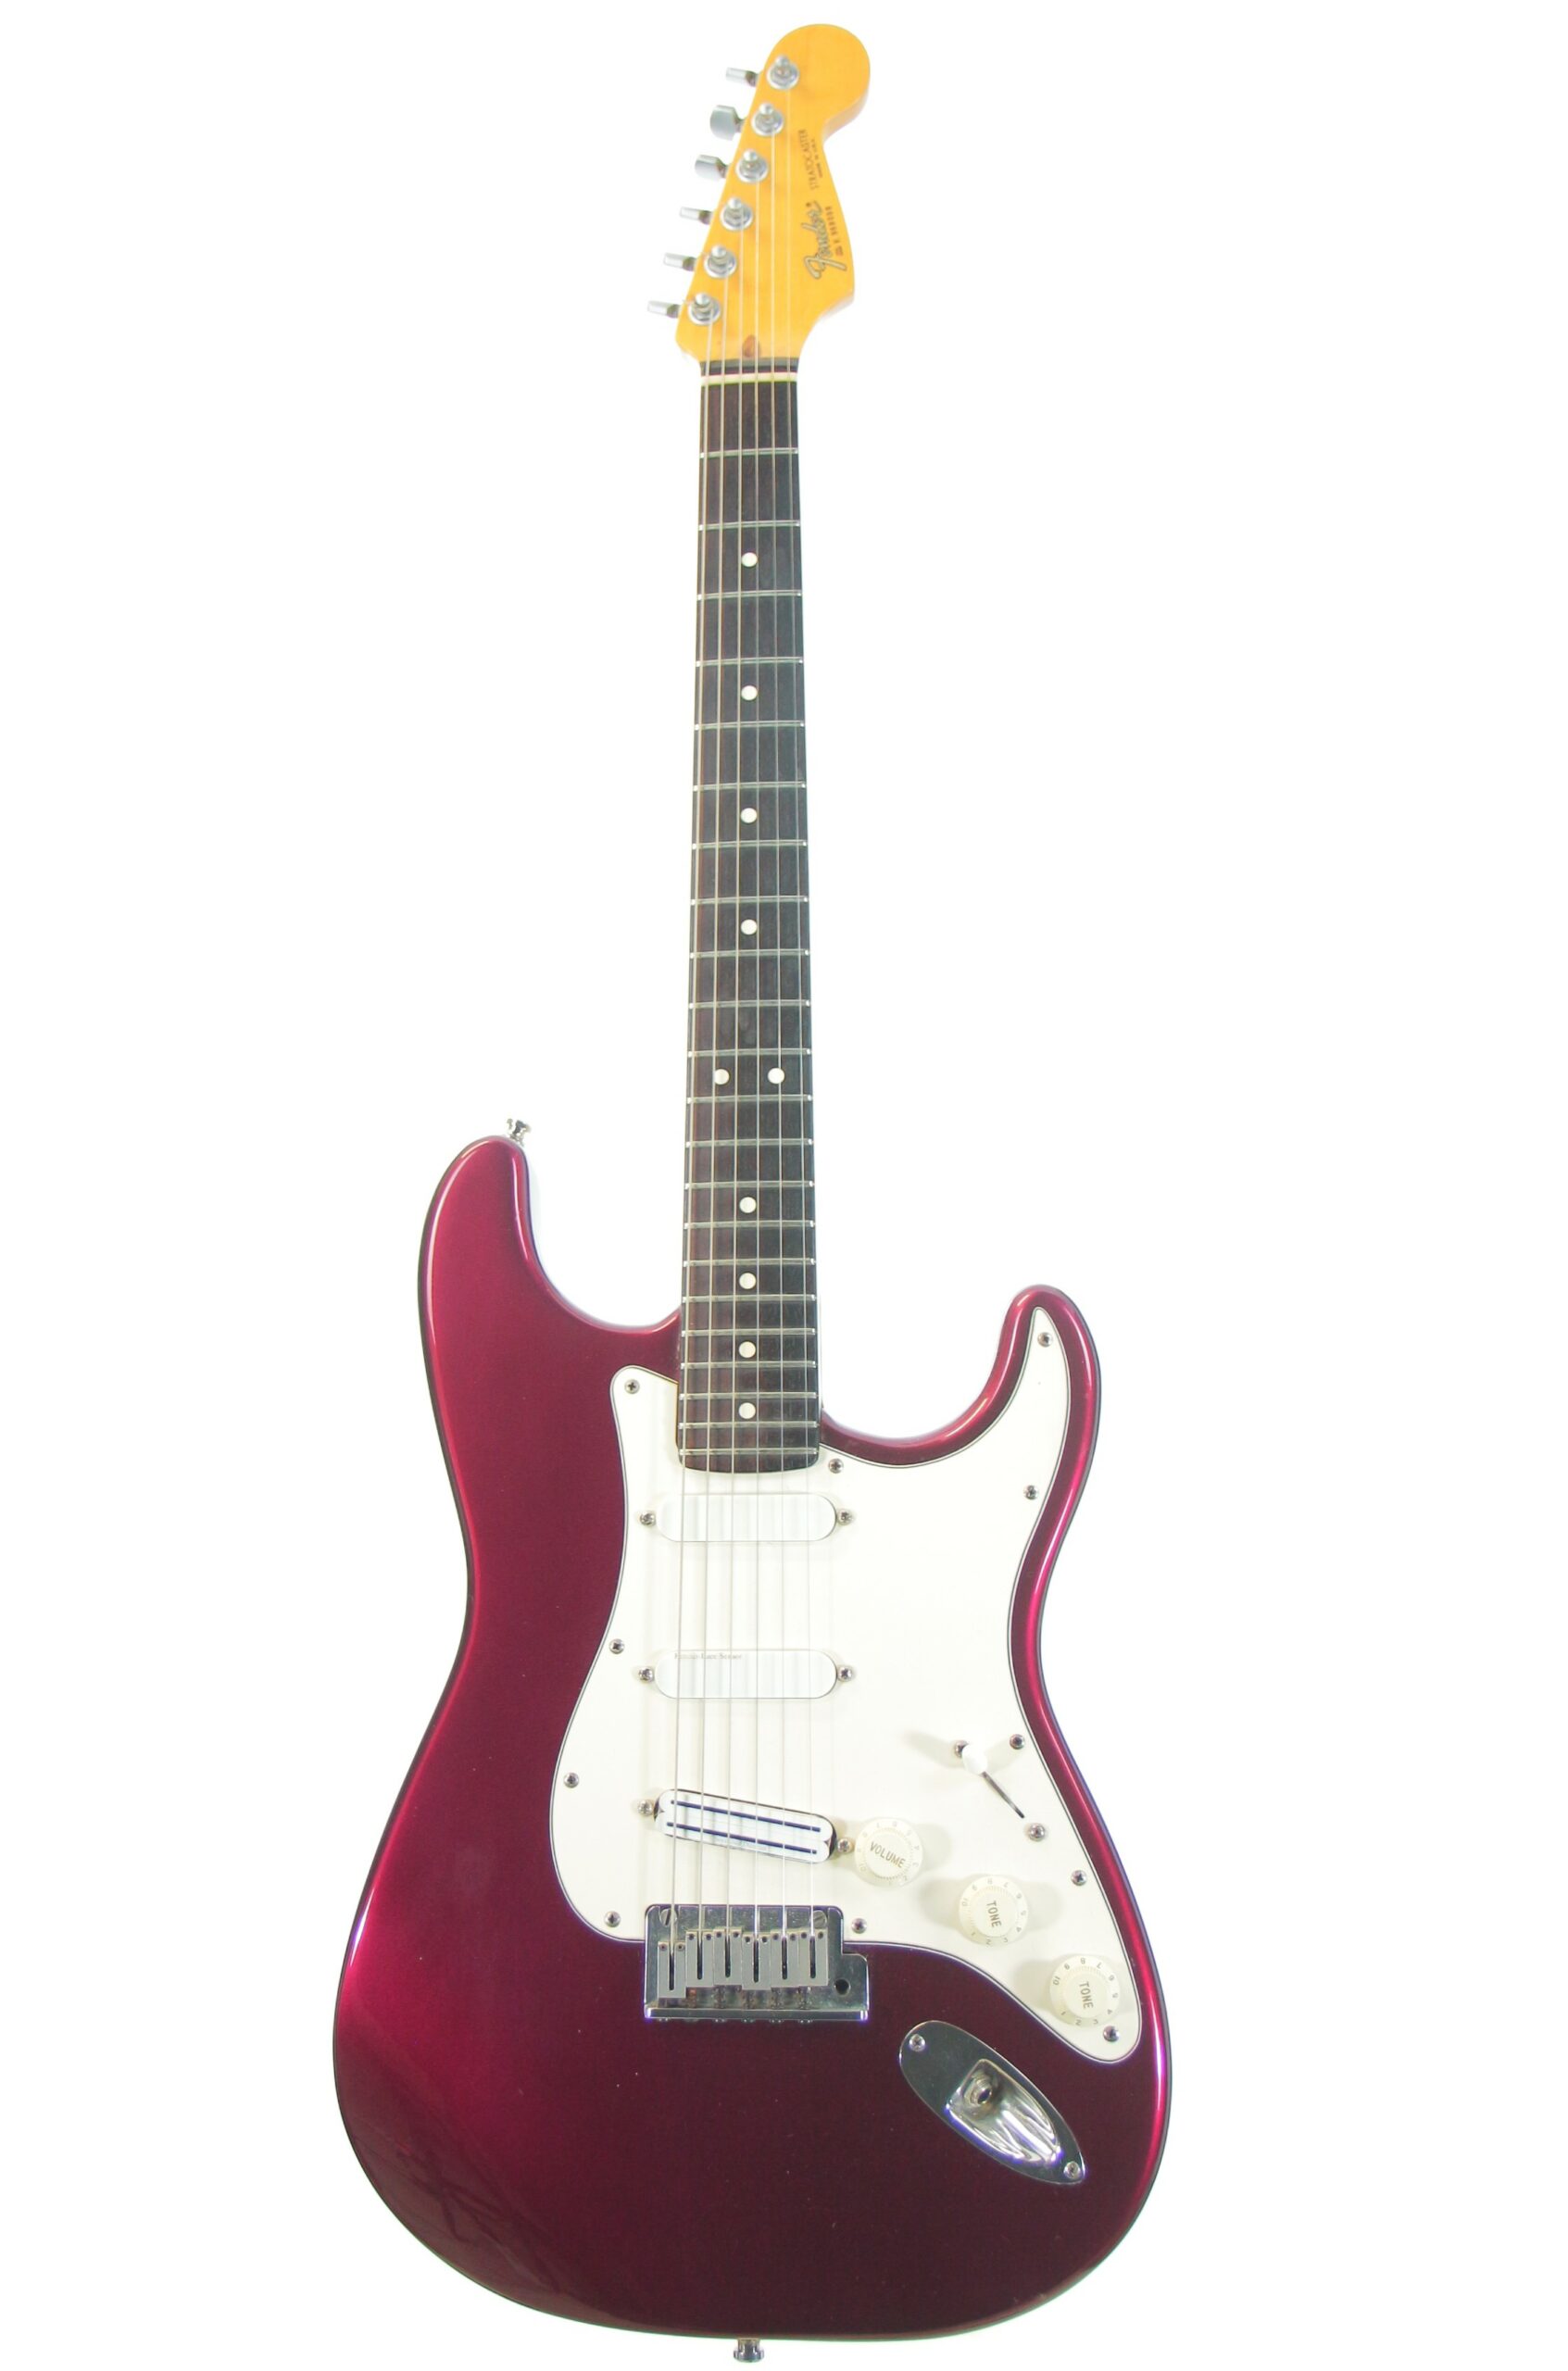 IMG 0146 1 scaled - Fender American Standard Stratocaster 1989